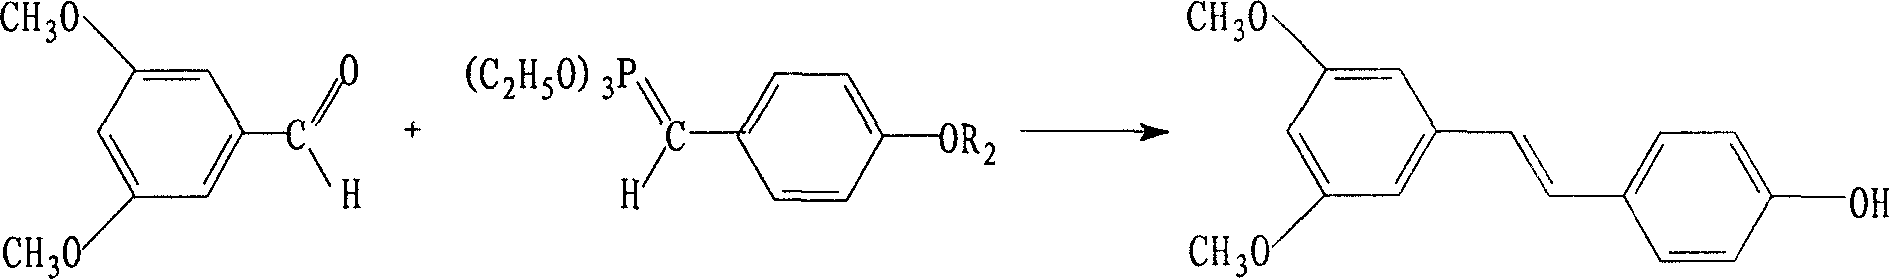 Synthetic method of pterostilbene